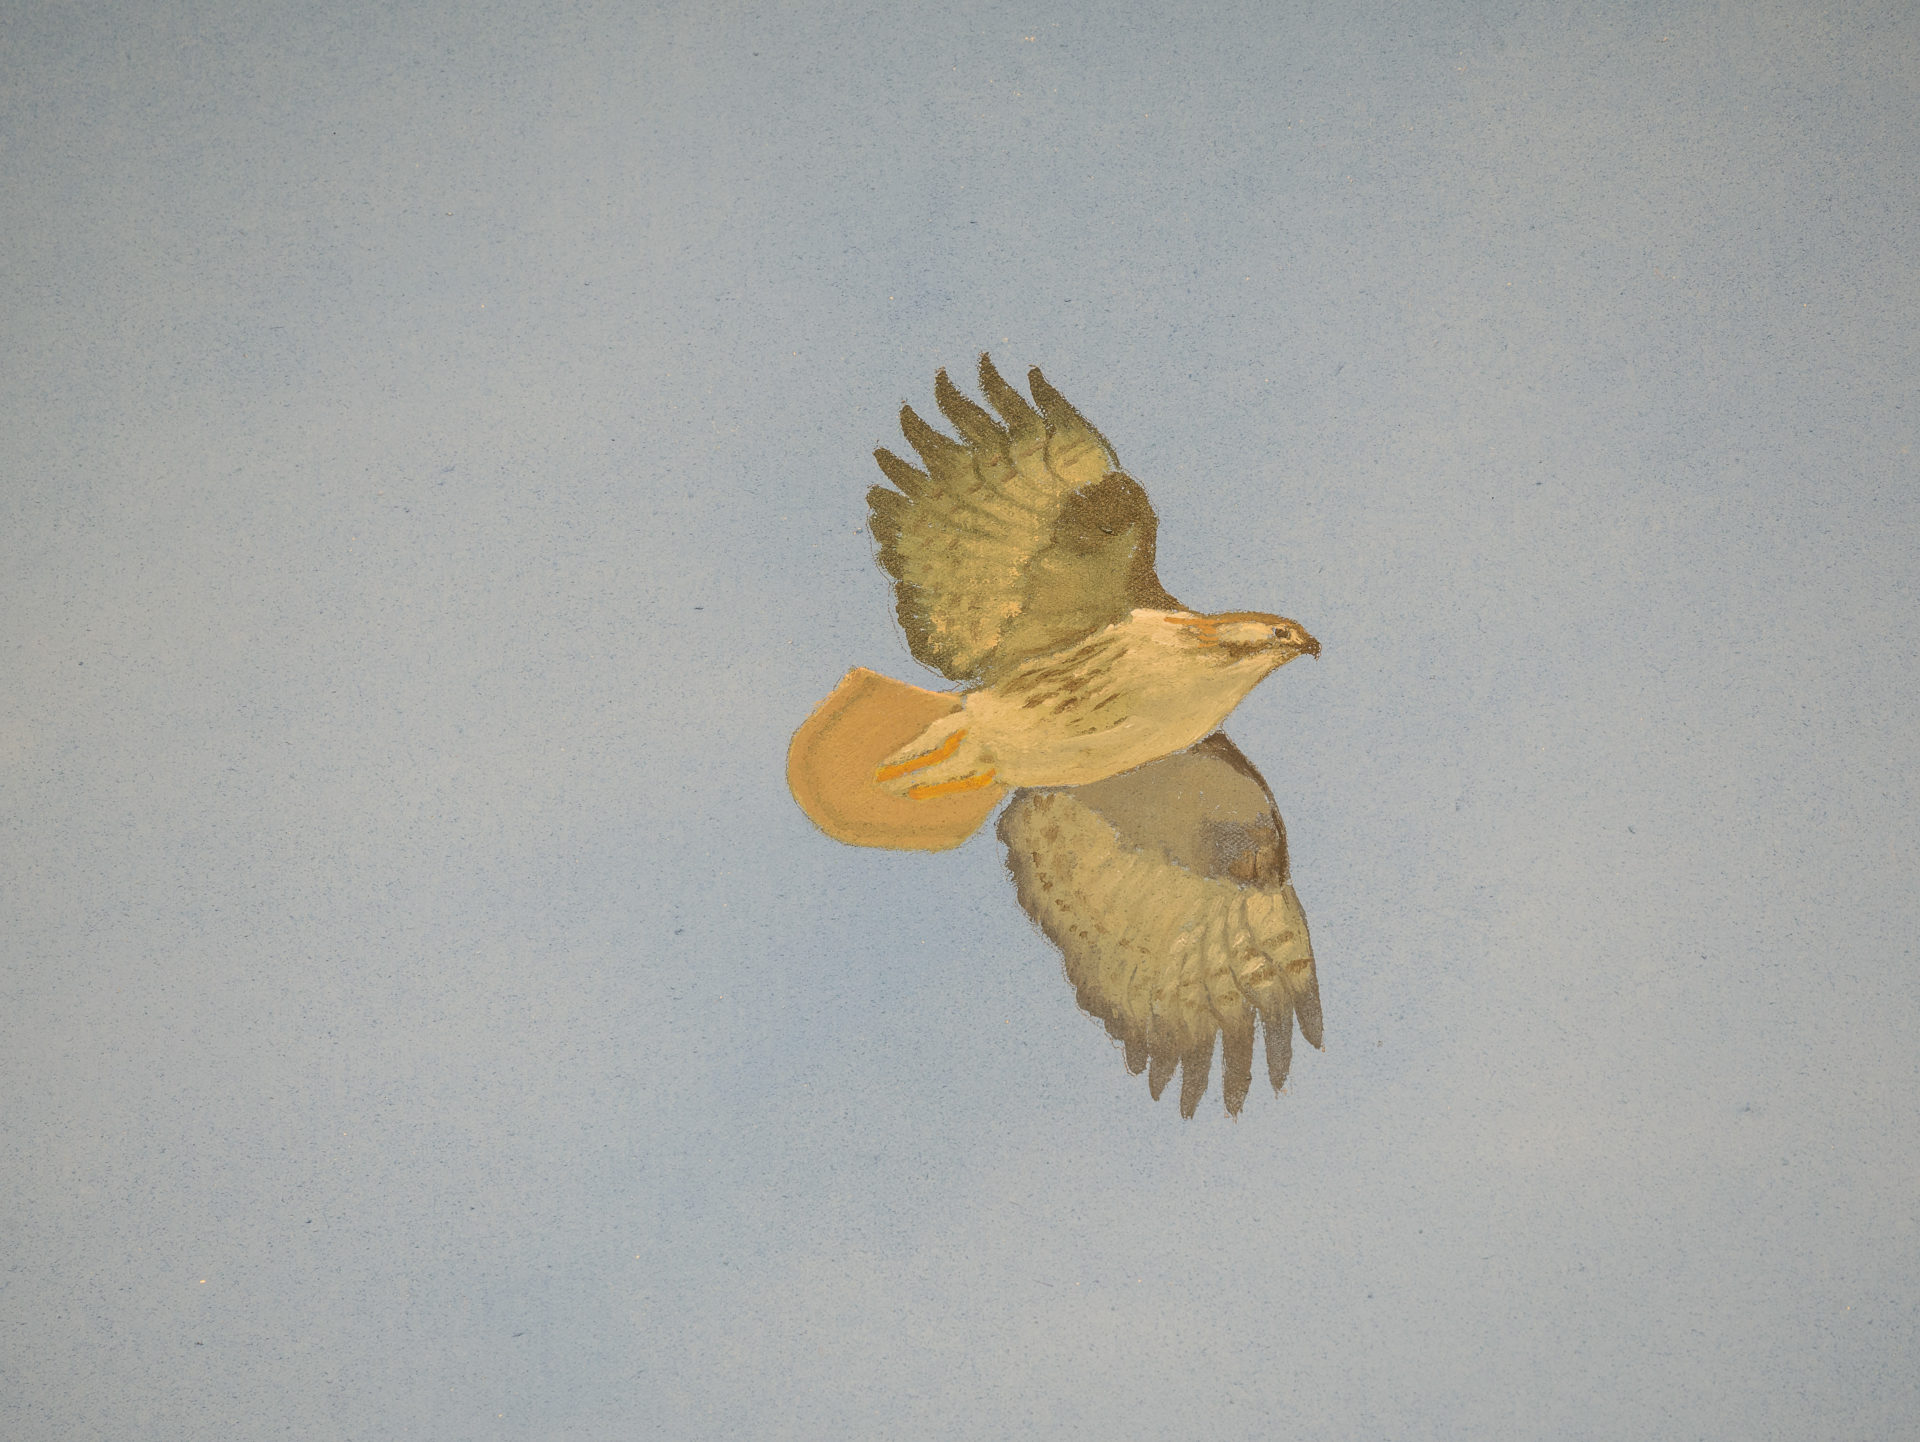 red-tailed hawk flies overhead